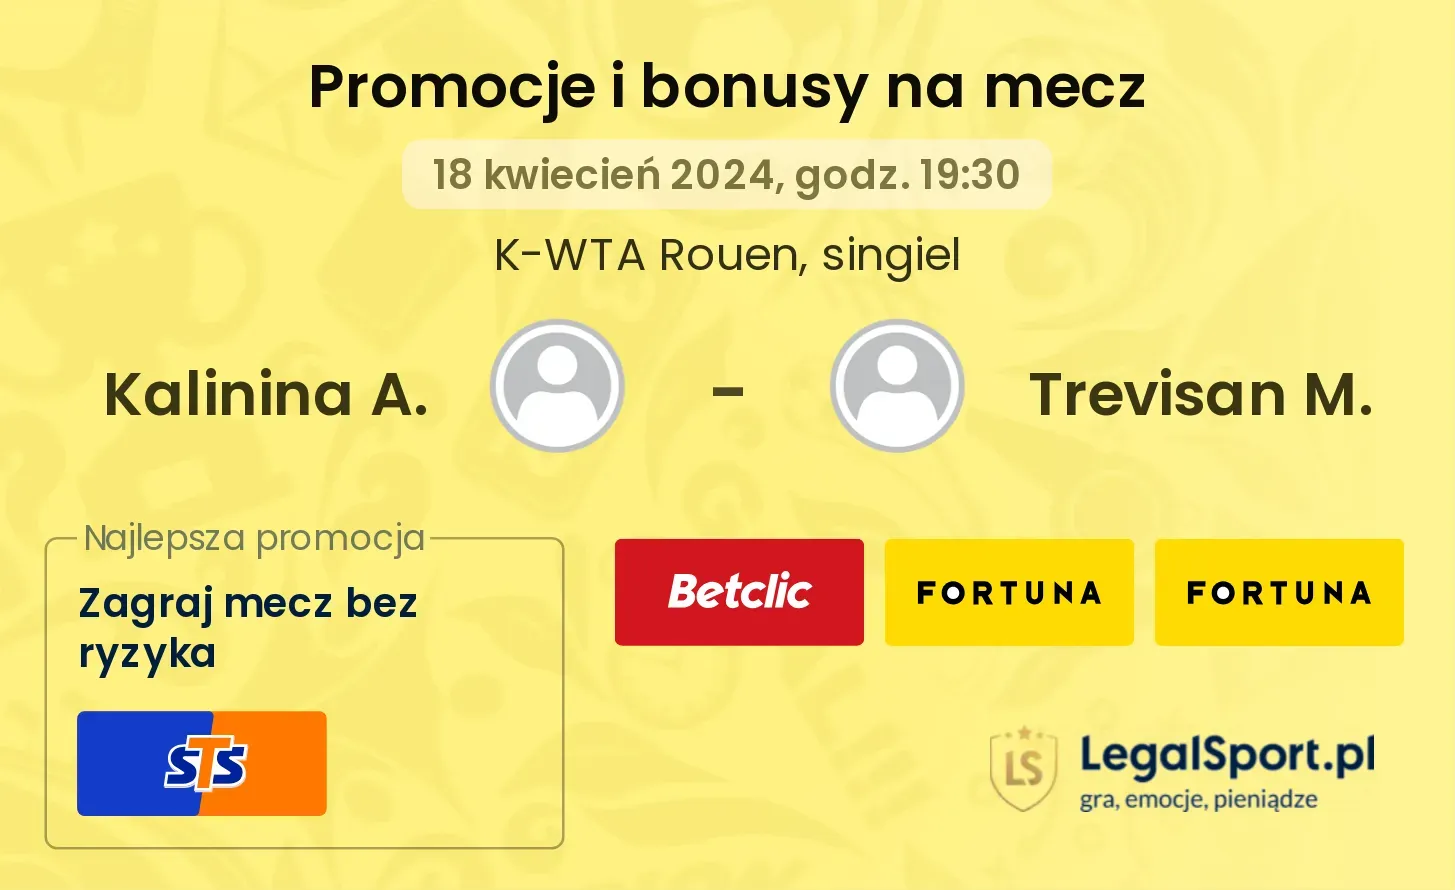 Kalinina A. - Trevisan M. promocje bonusy na mecz